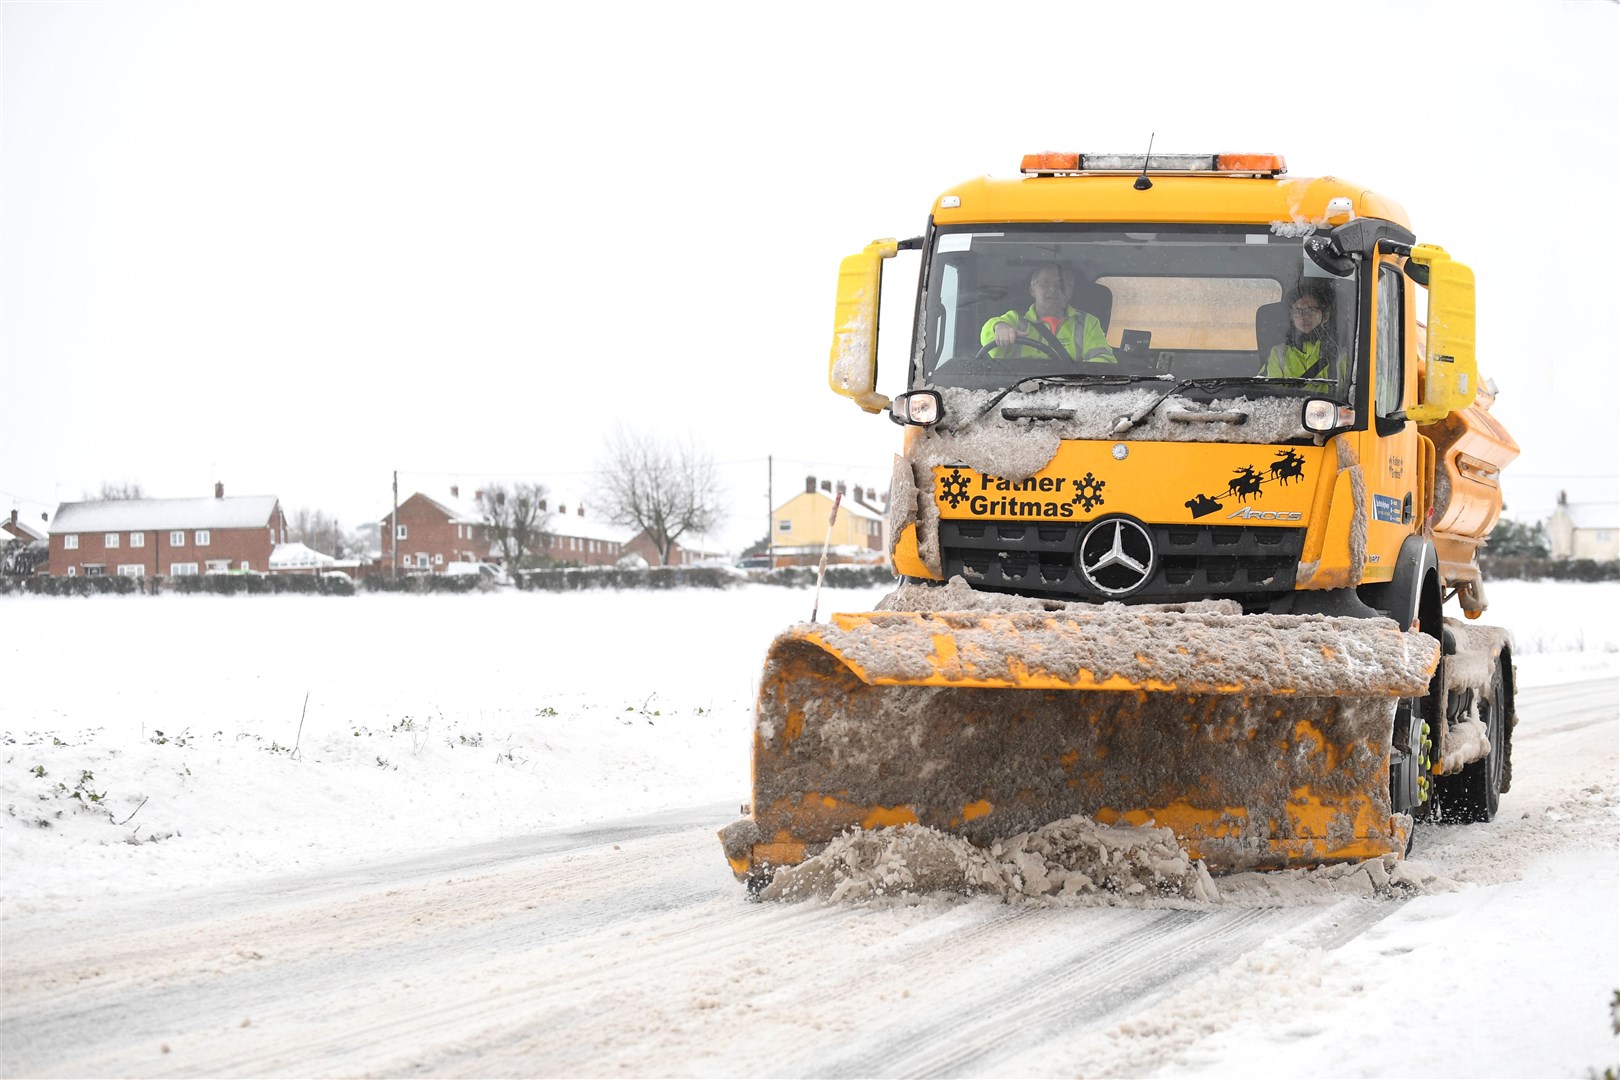 A ‘Father Gritmas’ snowplough clears the road through Barham, Suffolk (Joe Giddens/PA)